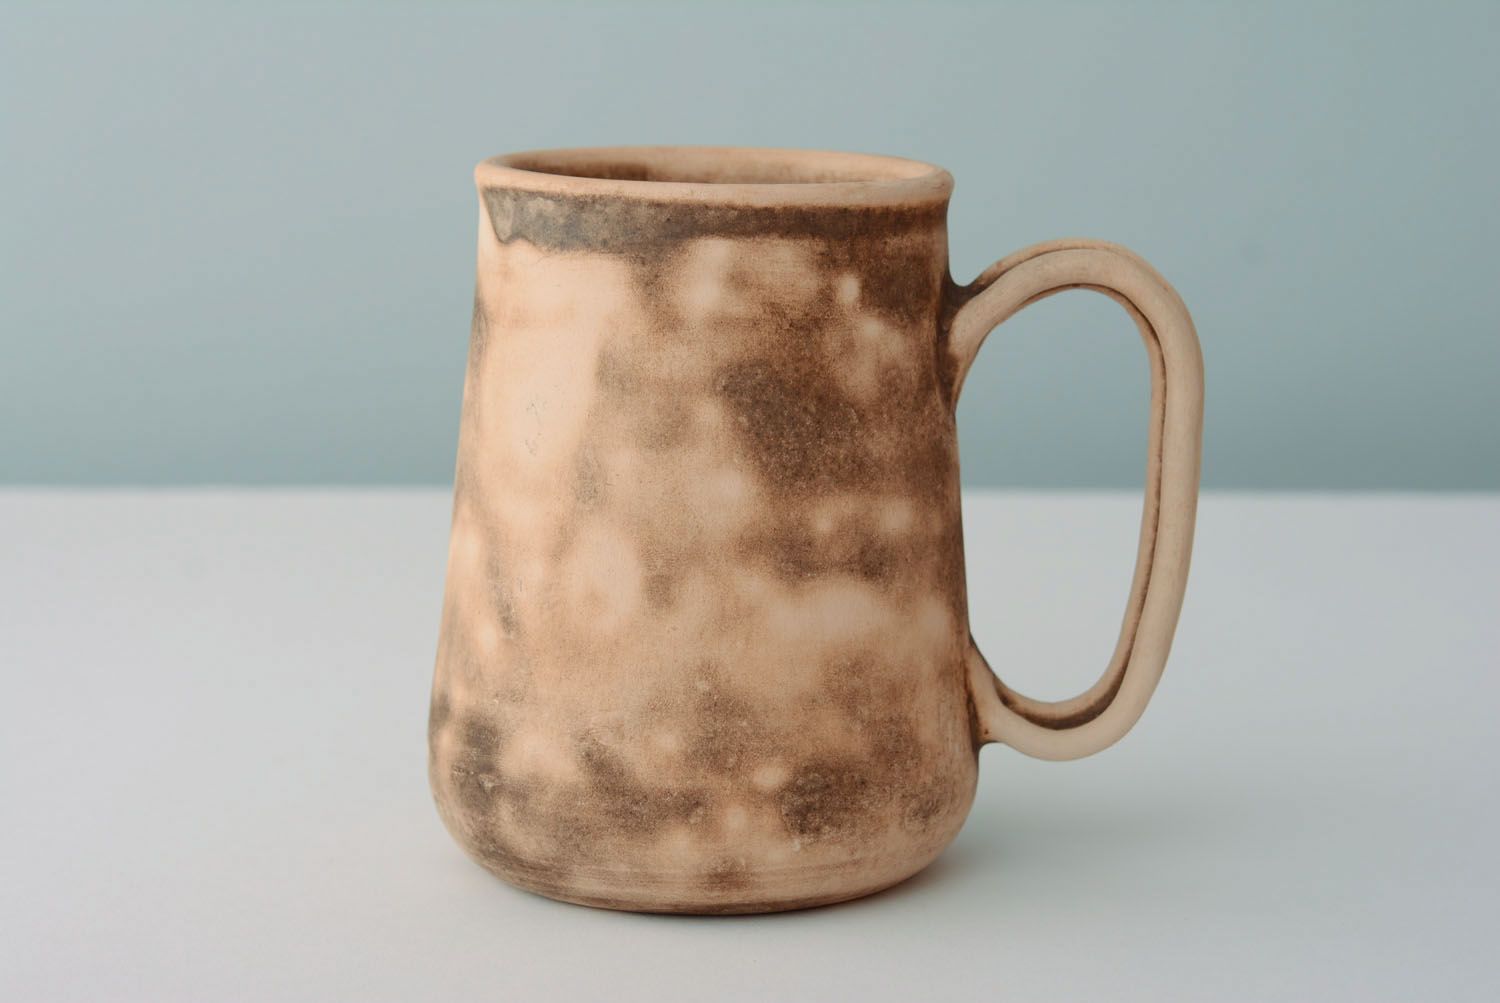 XXL clay beer mug, coffee mug in brown and beige color photo 1